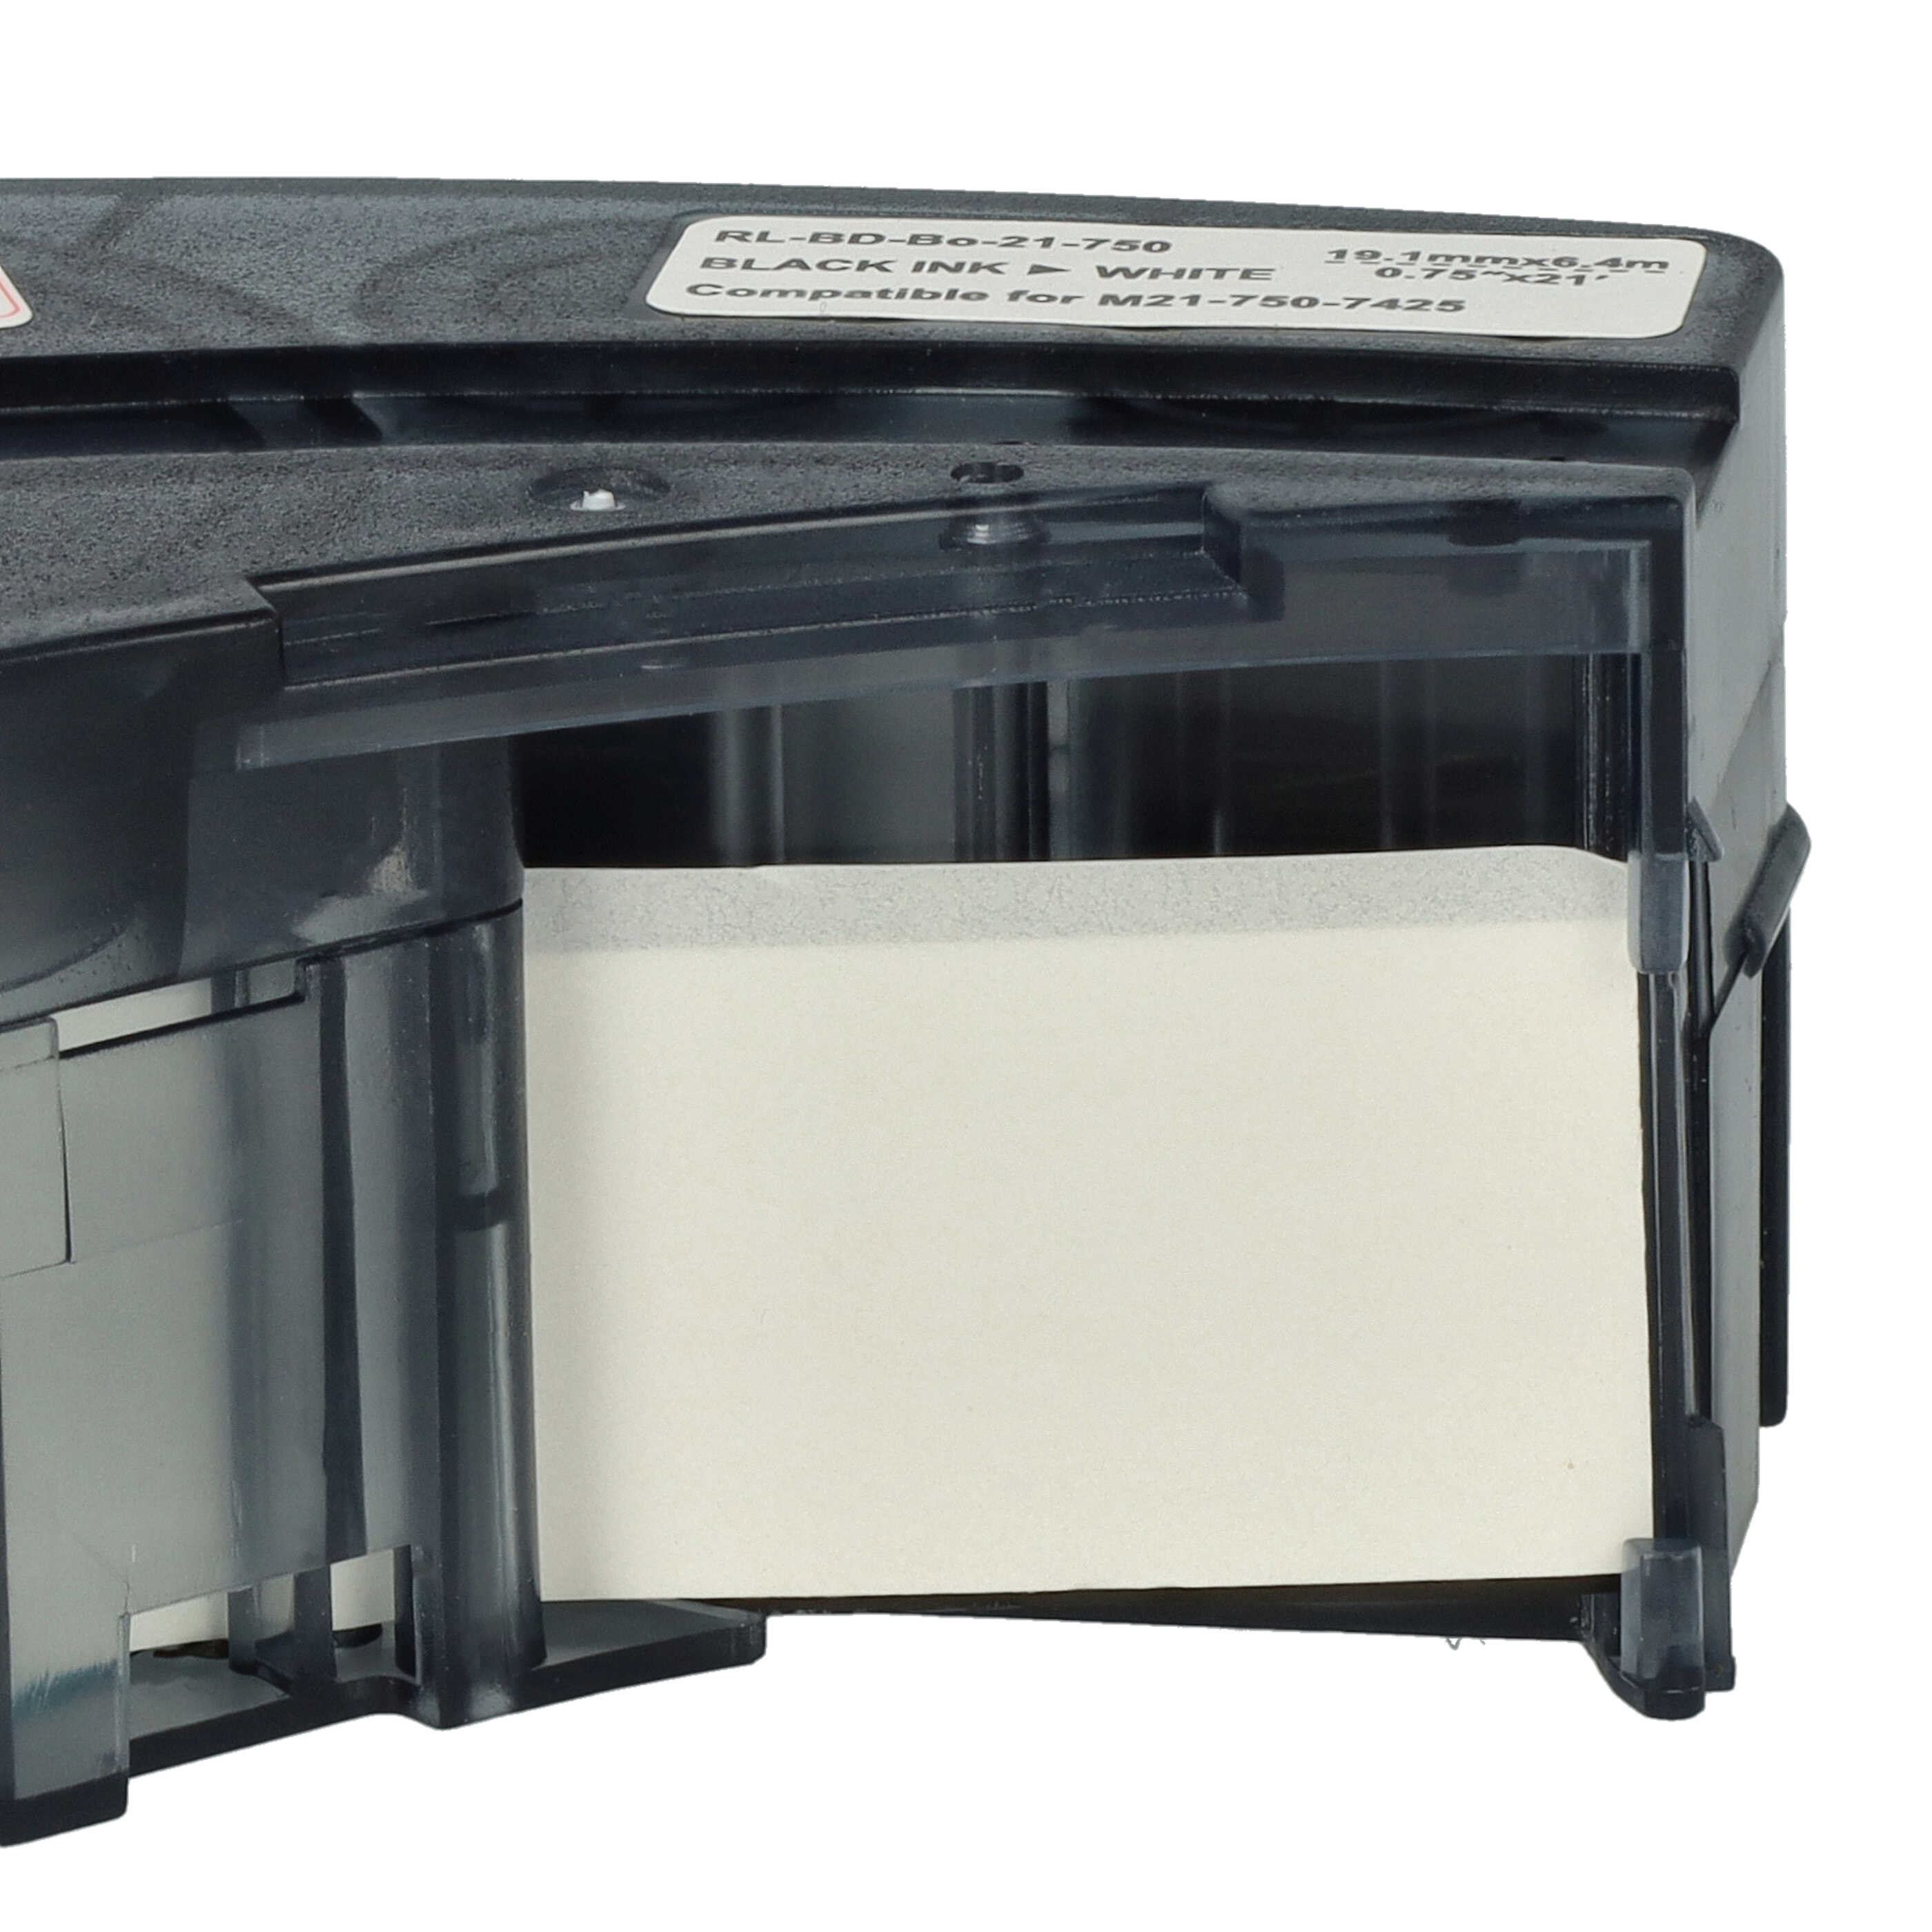 Cassetta nastro sostituisce Brady M21-750-7425 per etichettatrice Brady 19,05mm nero su bianco, polipropilene